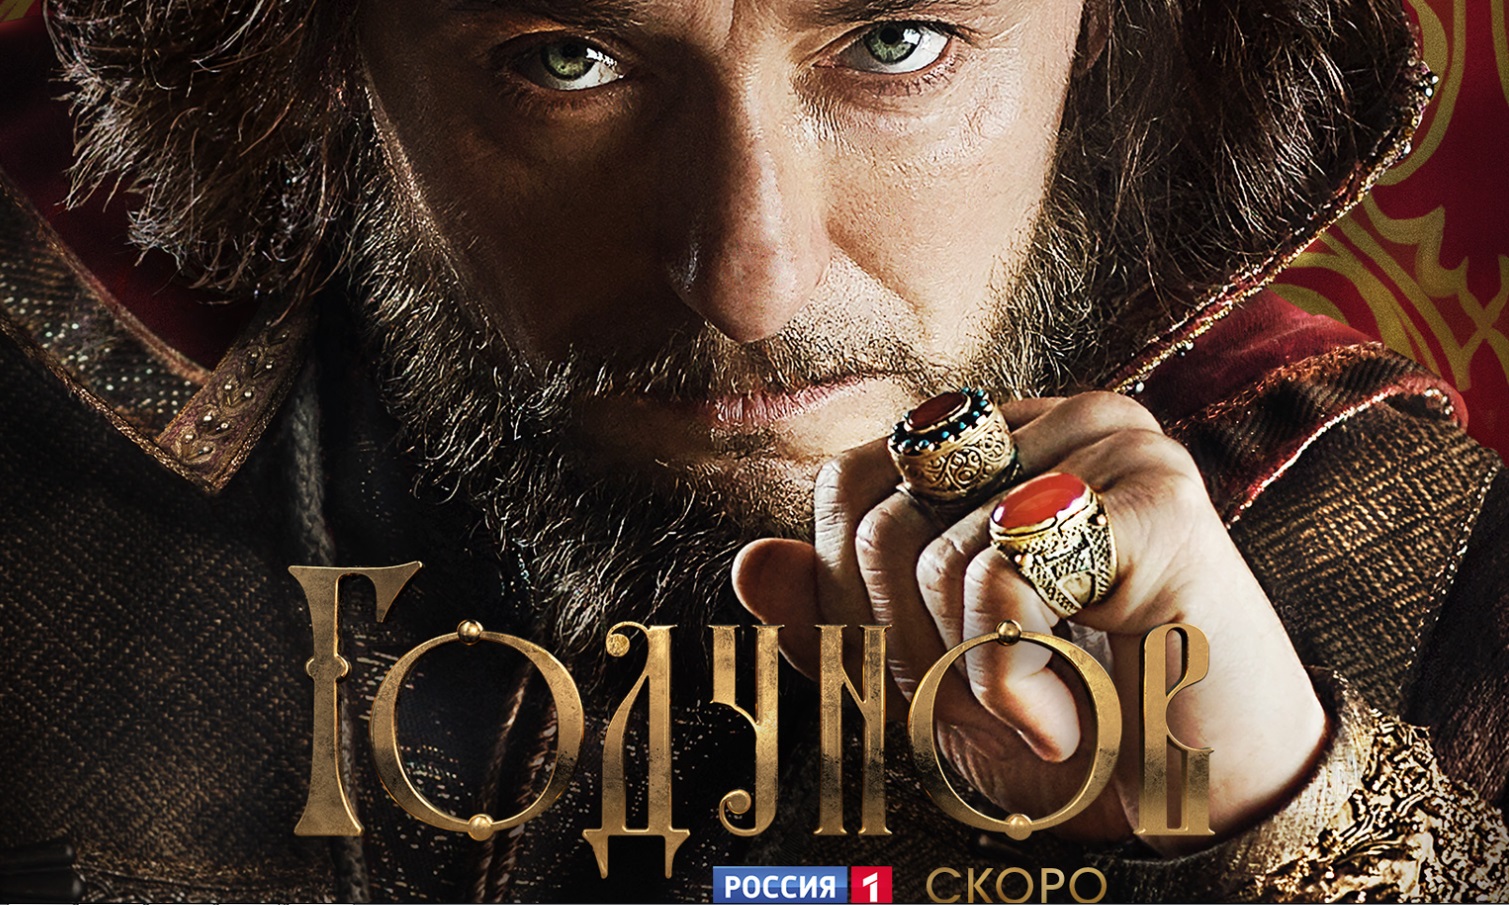 Тейковчанин сыграл богача в свите царя на съемках исторического сериала (ФОТО)